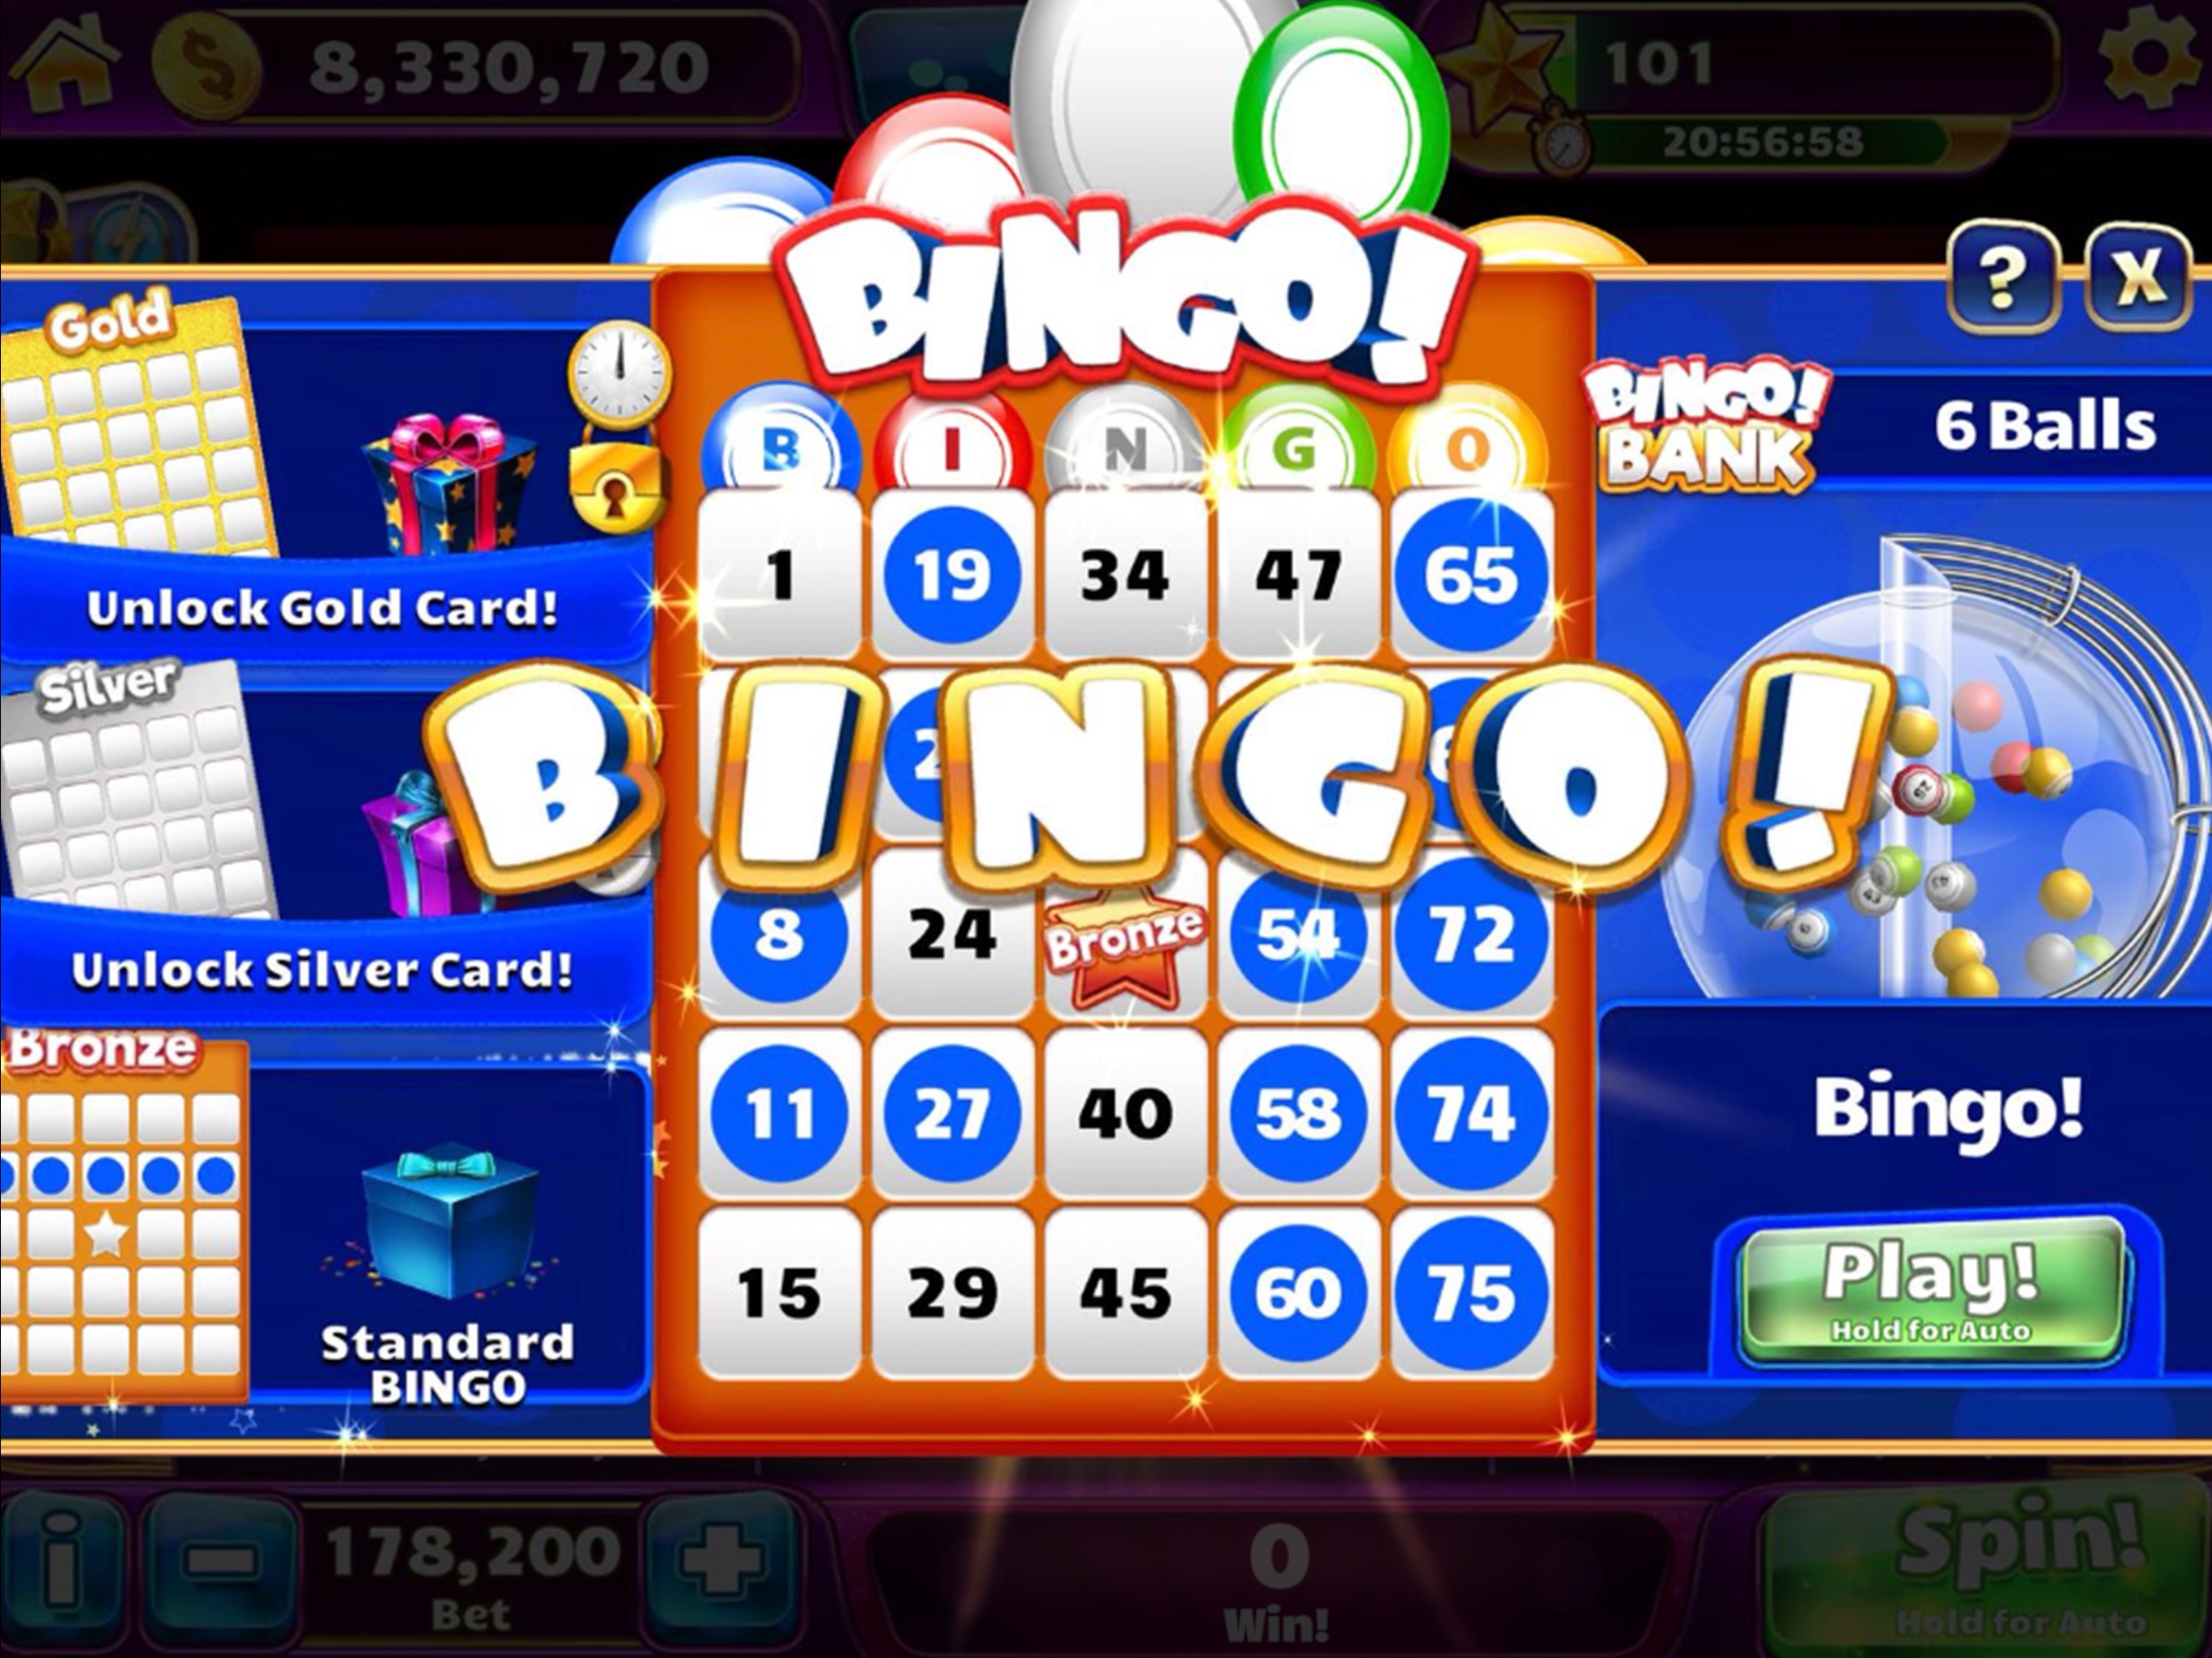 Online casinos like bovada